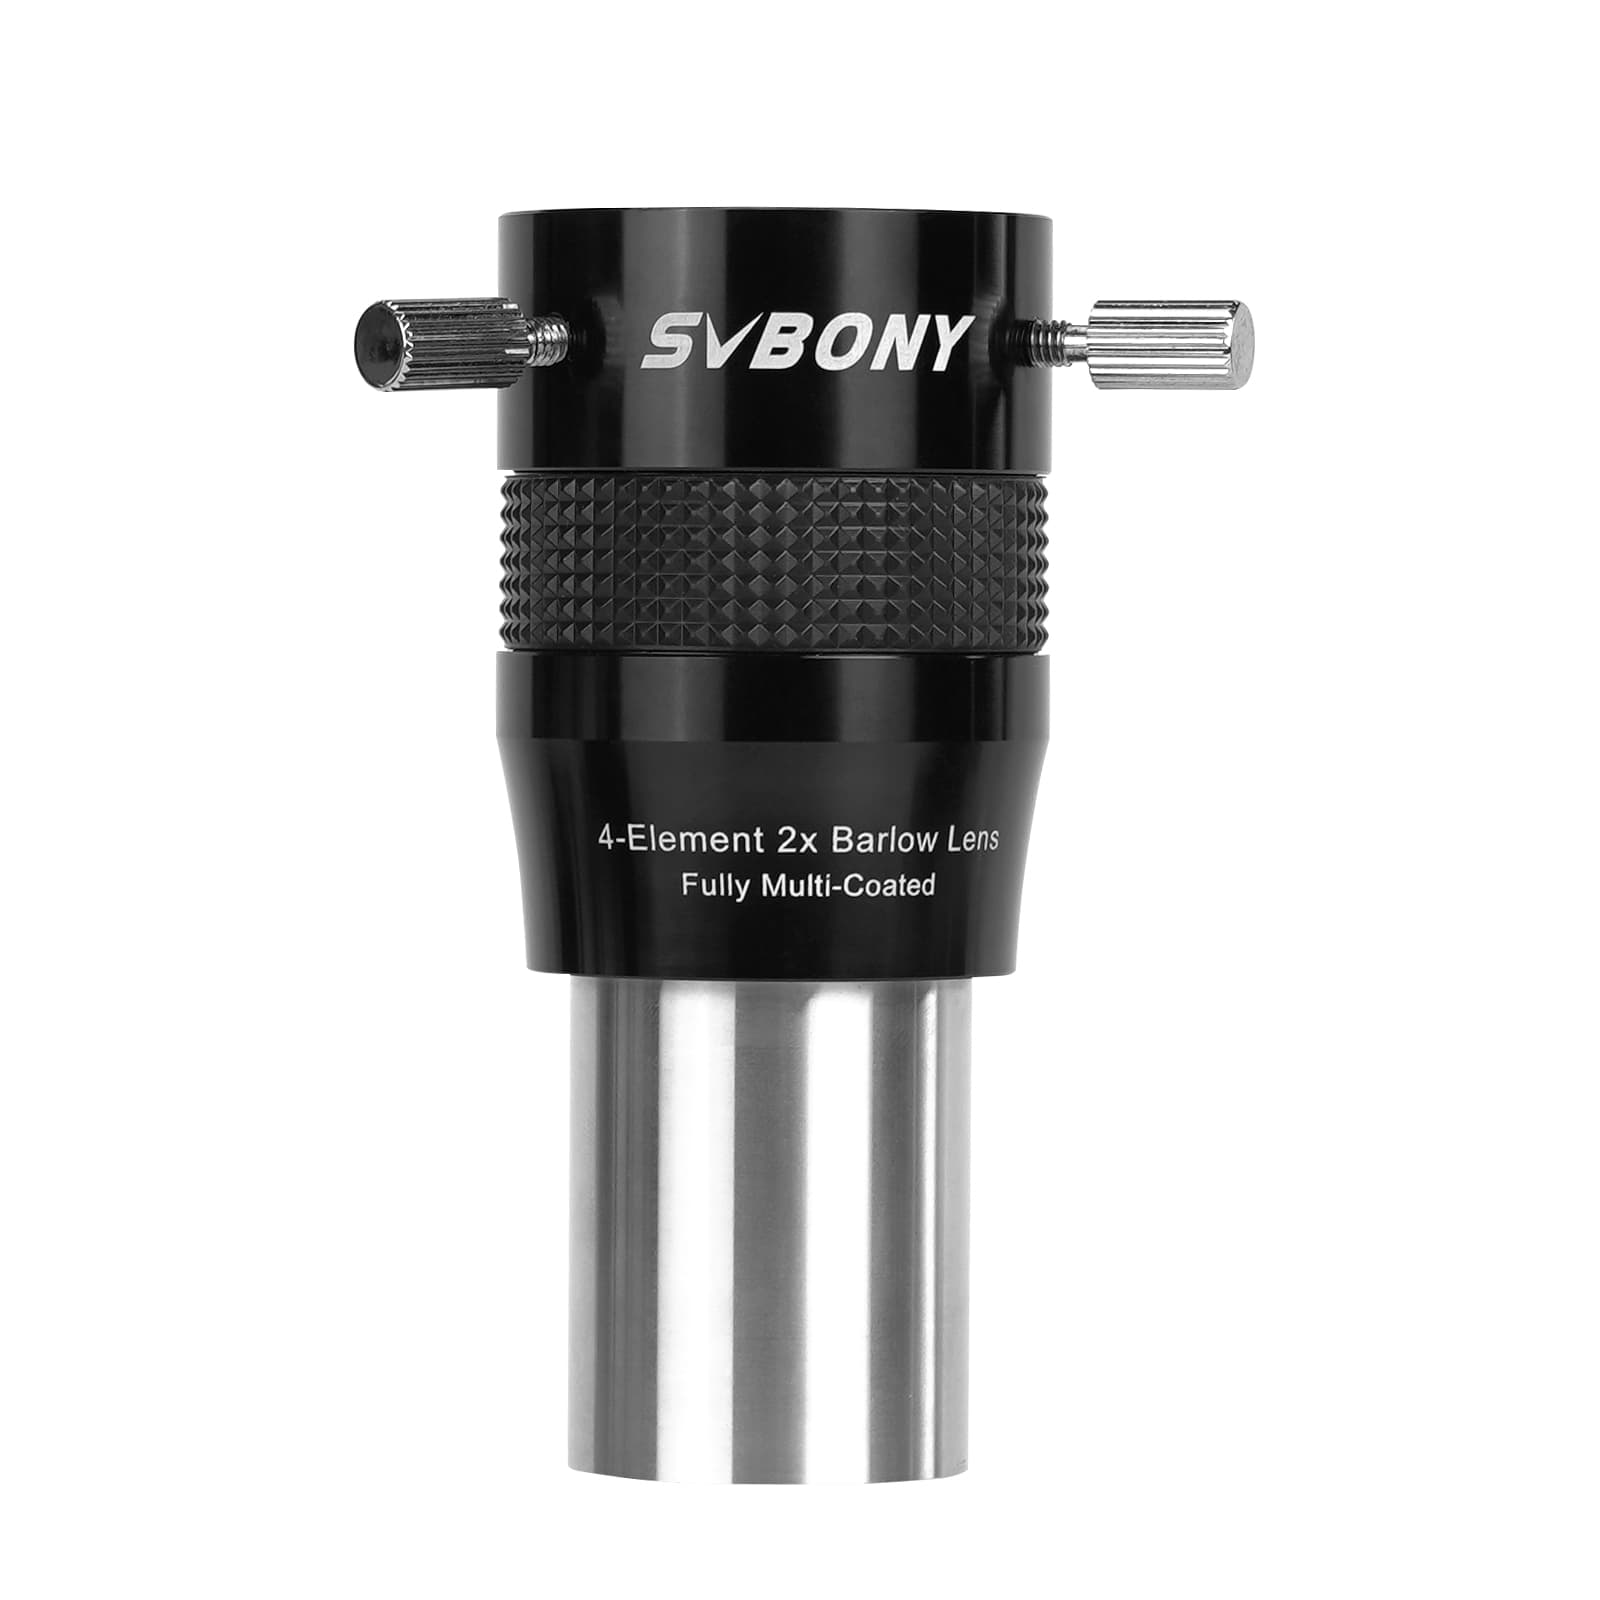 Svbony Barlow SVBONY SV216 1.25" 2X 4-Element Barlow Lens for Imaging Visual Applications - W9168A